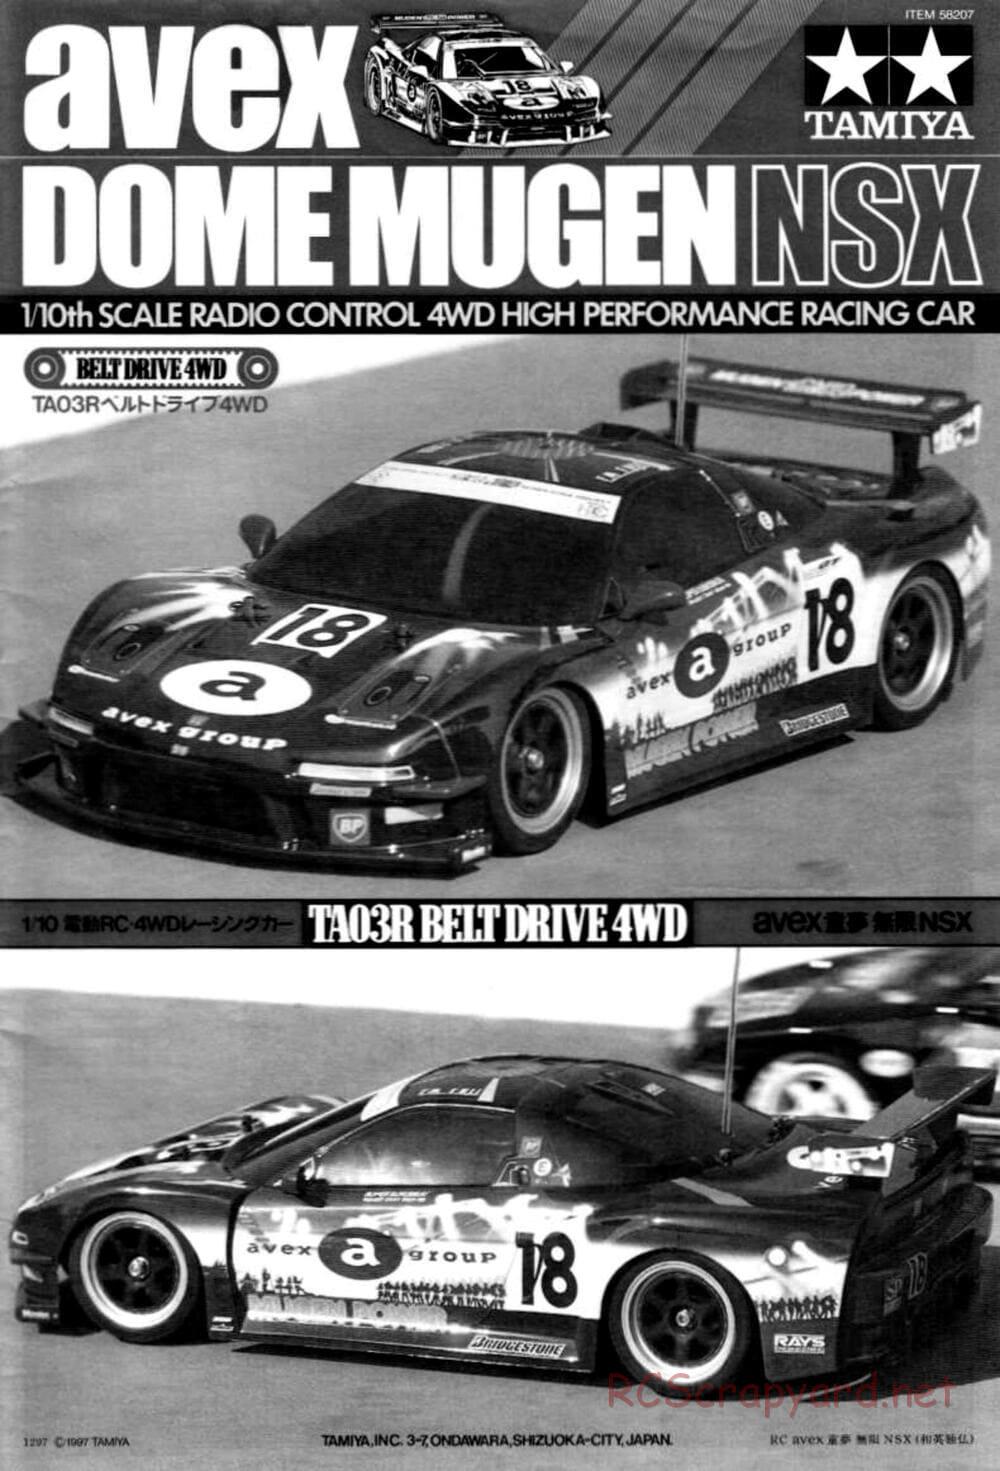 Tamiya - Avex Dome Mugen NSX - TA-03R Chassis - Manual - Page 1